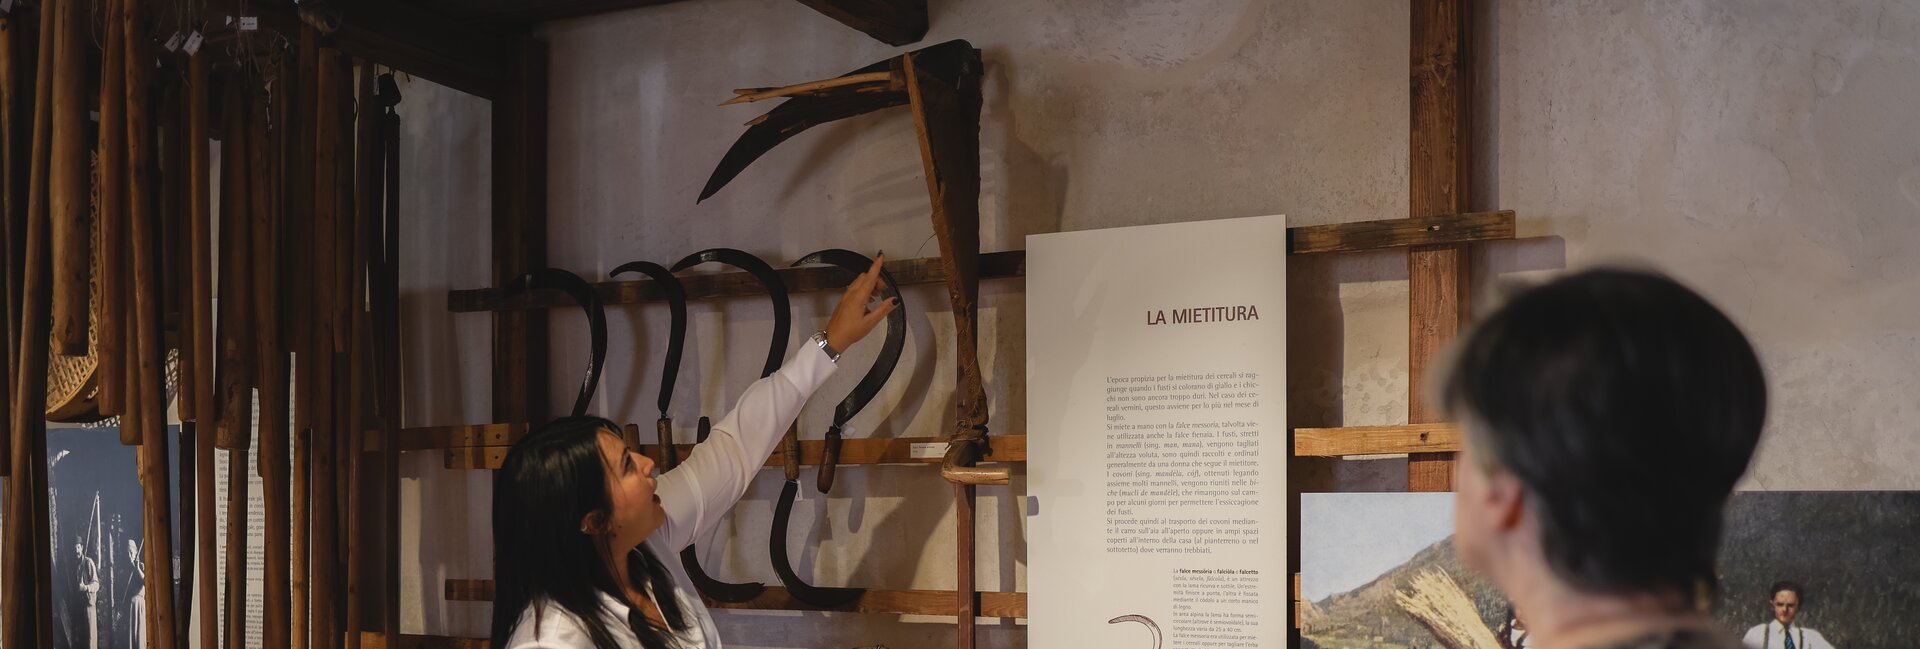 METS - Trentiner Ethnografisches Museum San Michele  